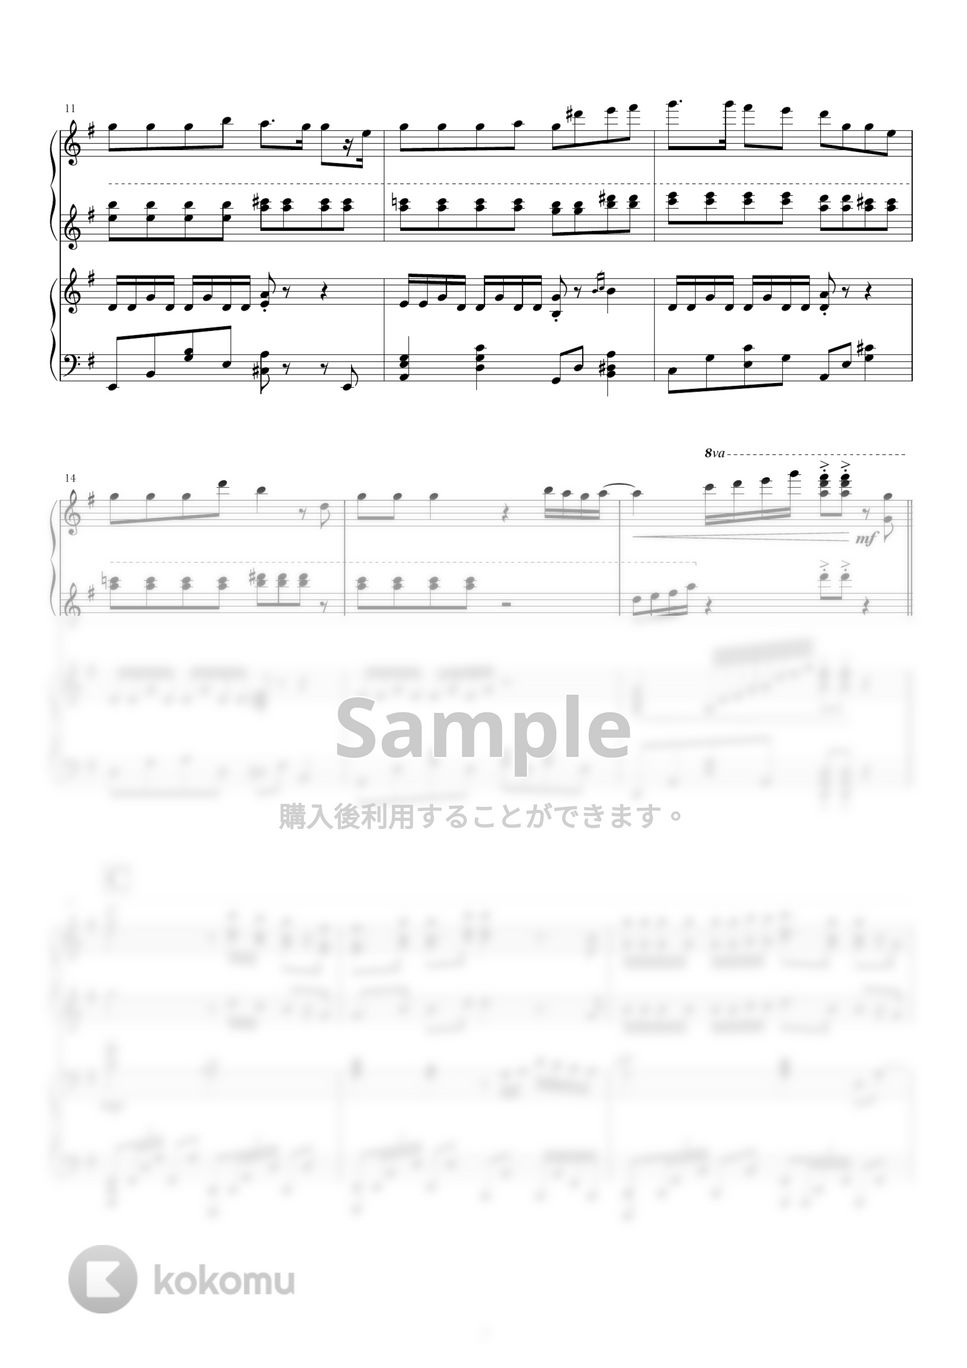 Mrs. GREEN APPLE - 僕のこと (ピアノ連弾) by norimaki